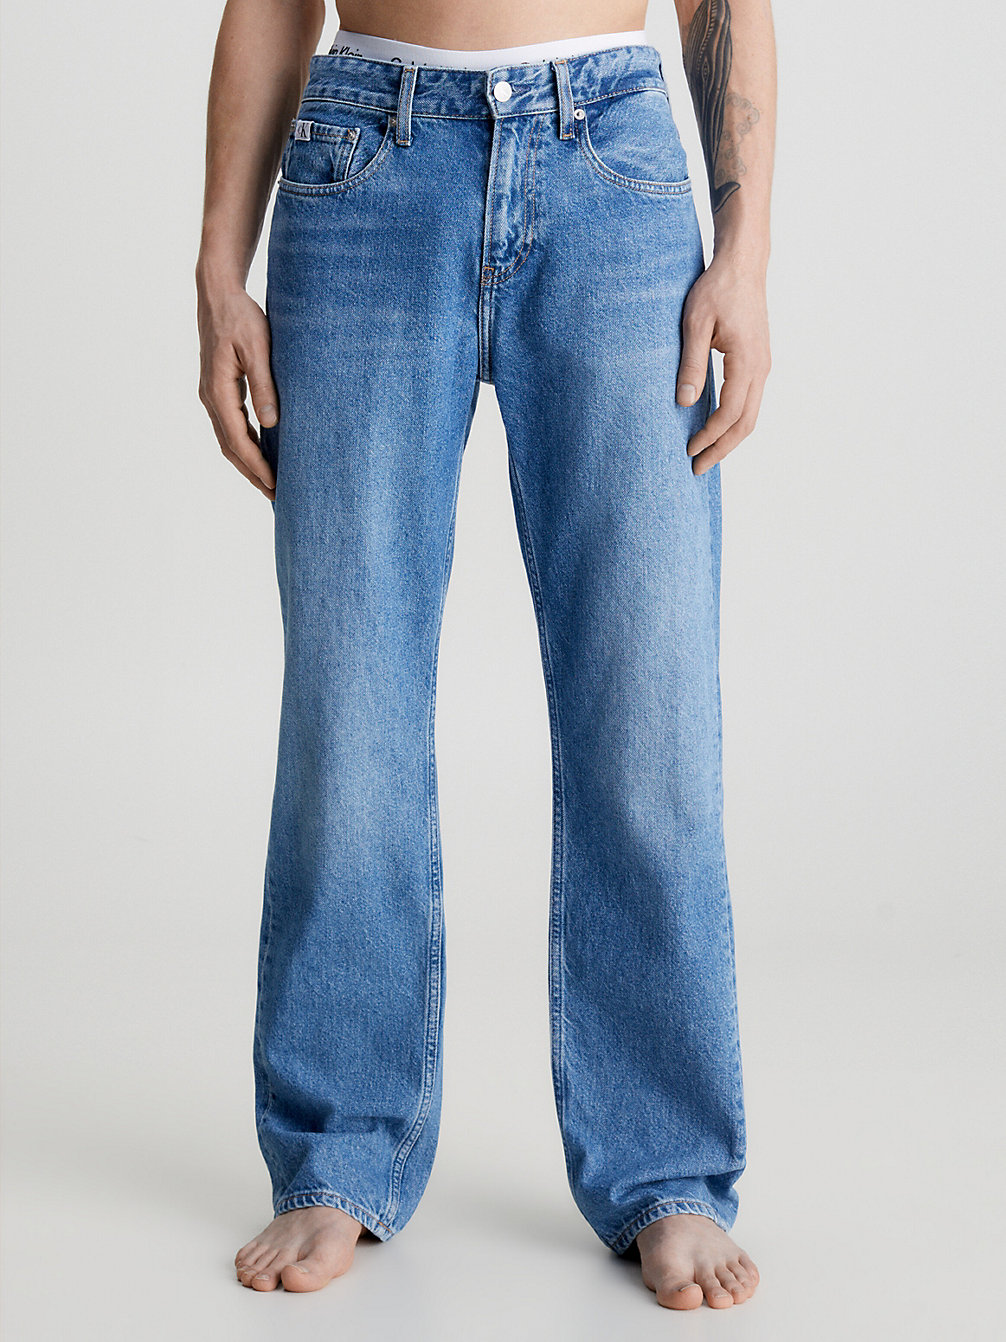 Men's Jeans | Skinny, Slim-fit, Ripped & More | Calvin Klein®